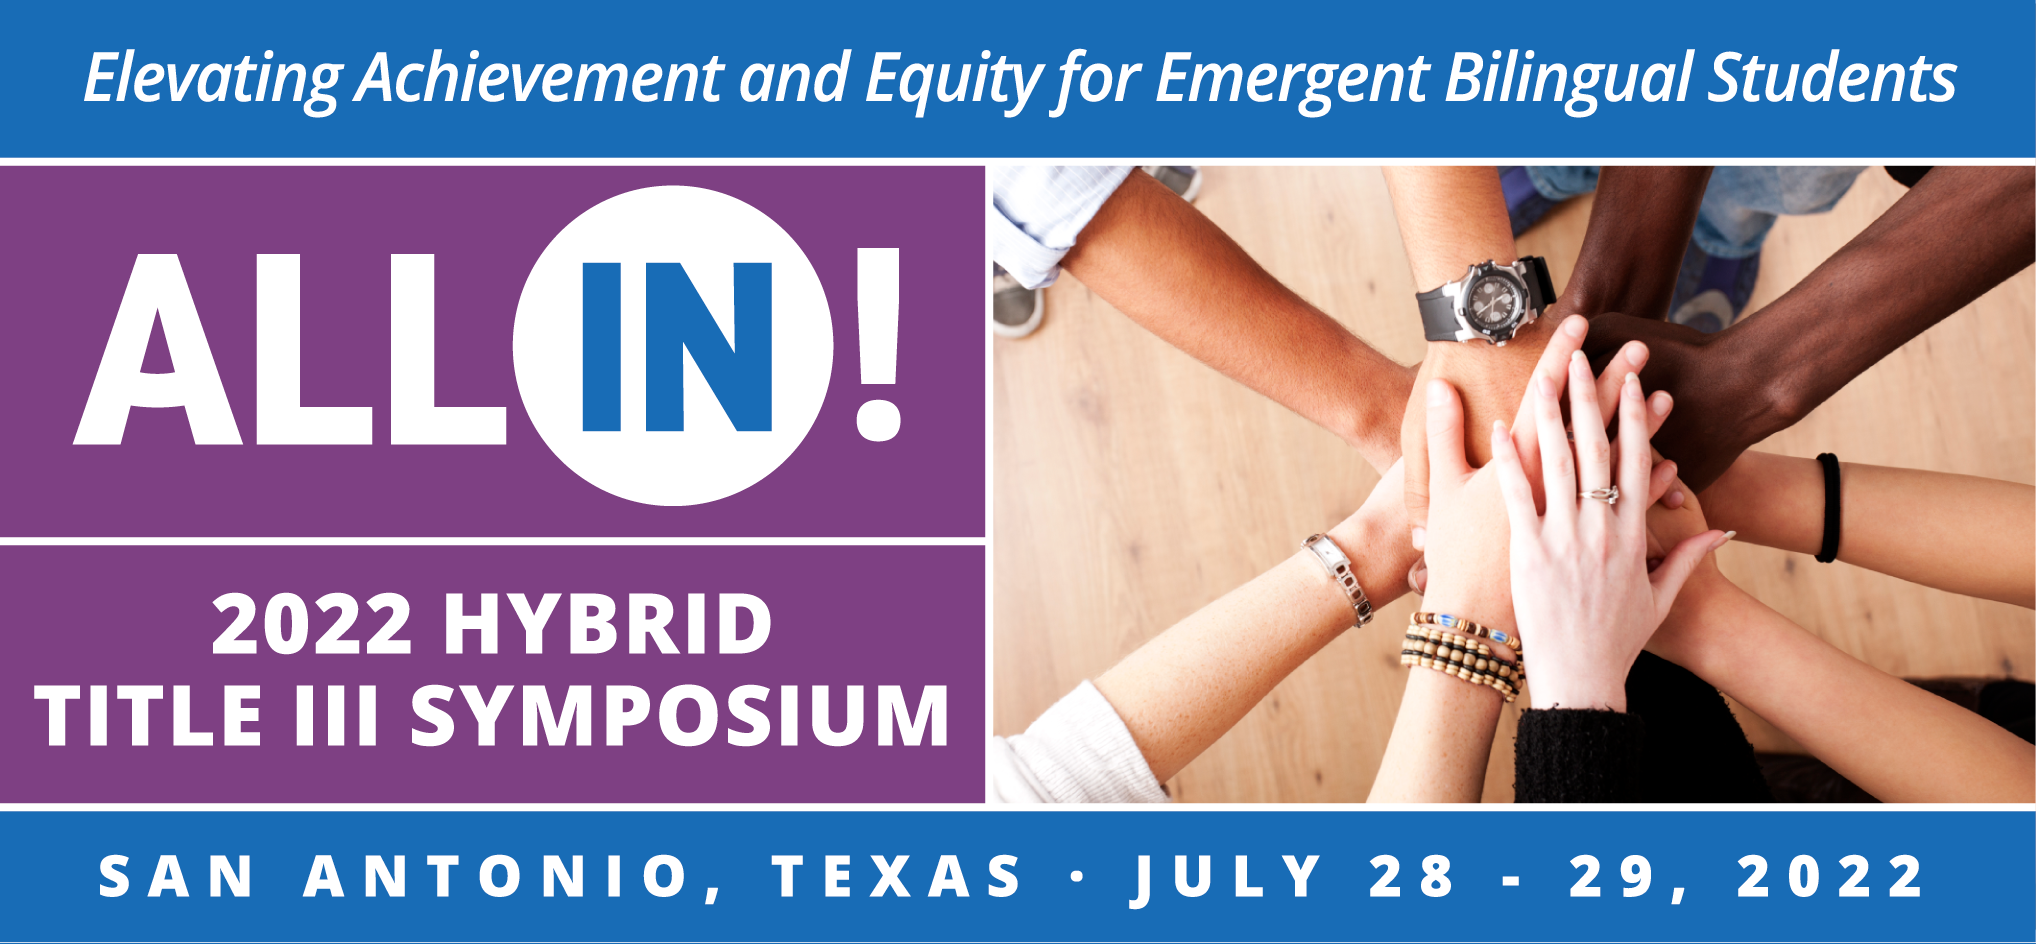 All IN! 2022 Hybrid Title III Symposium - San Antonio, Texas - July 28-29, 2022